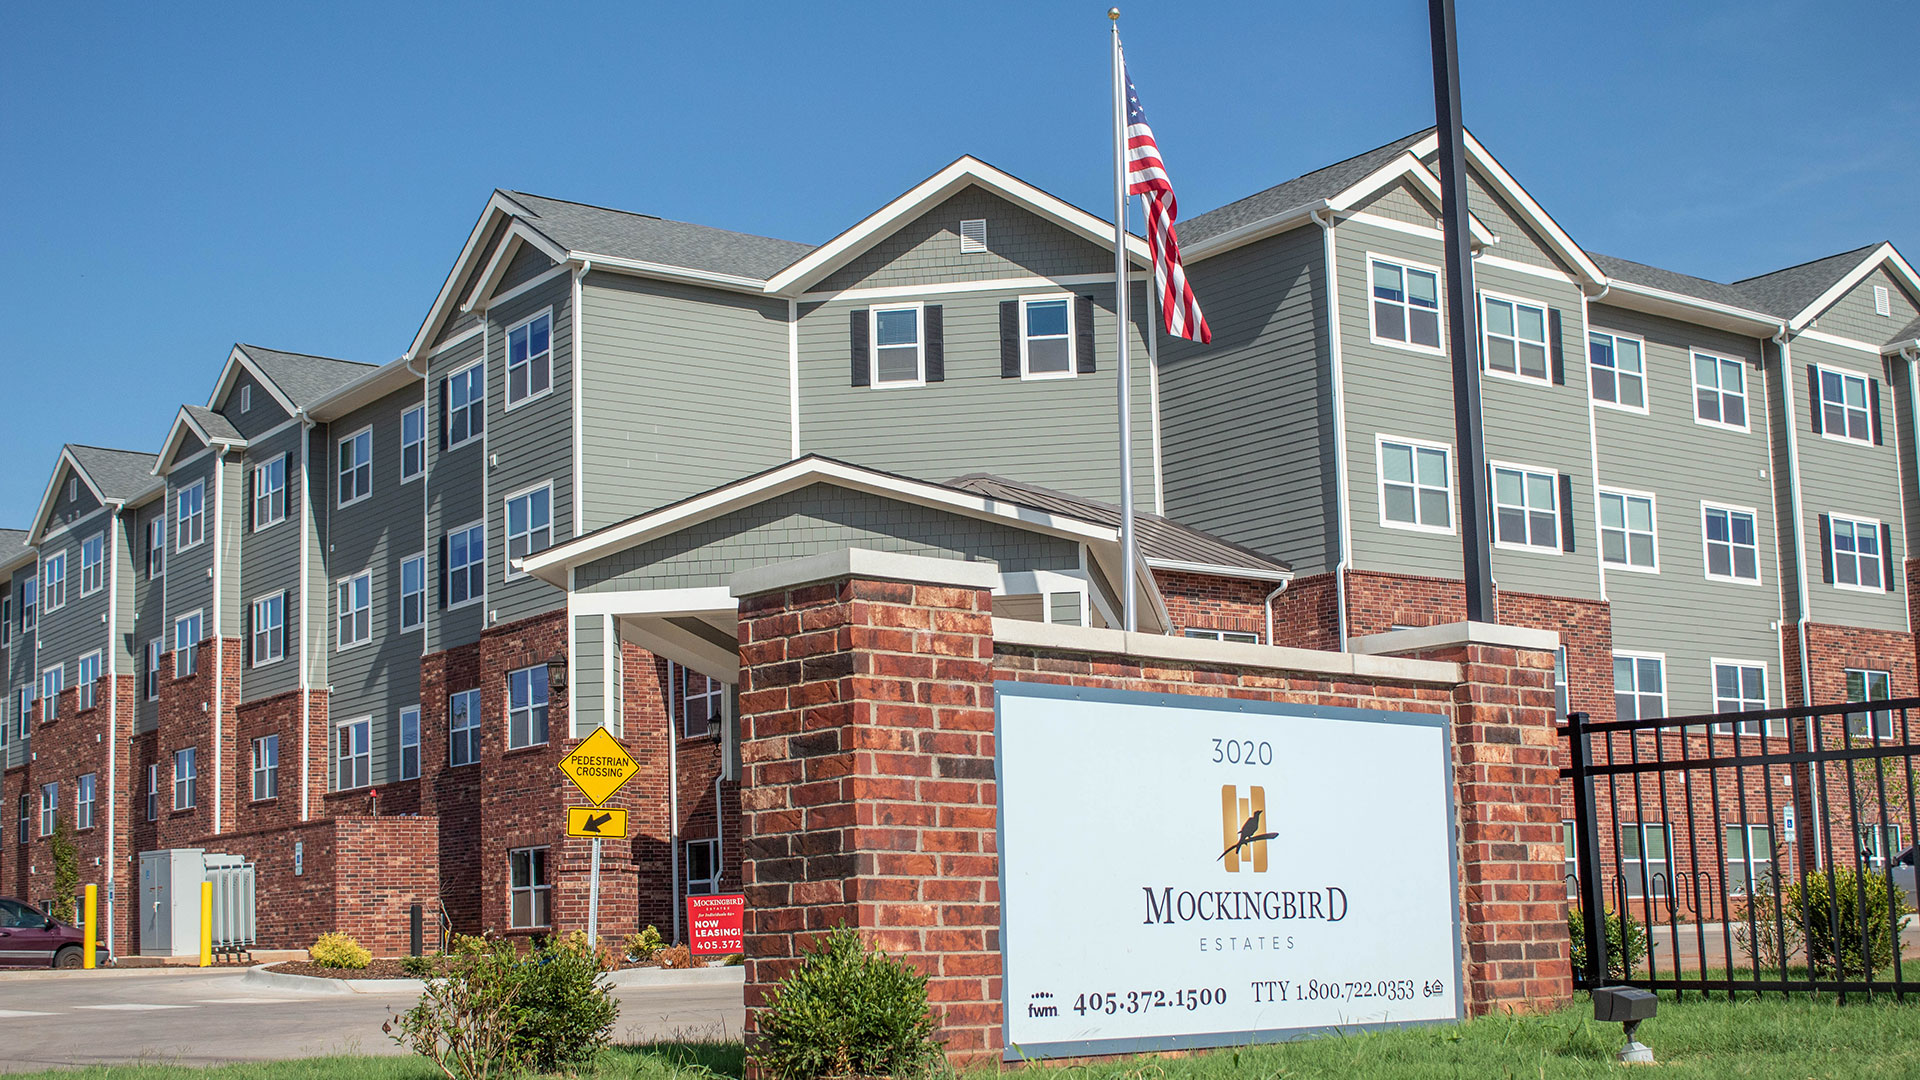 Mockingbird Estates, a Fairway Management affordable senior living community, recently opened in Stillwater, Oklahoma.